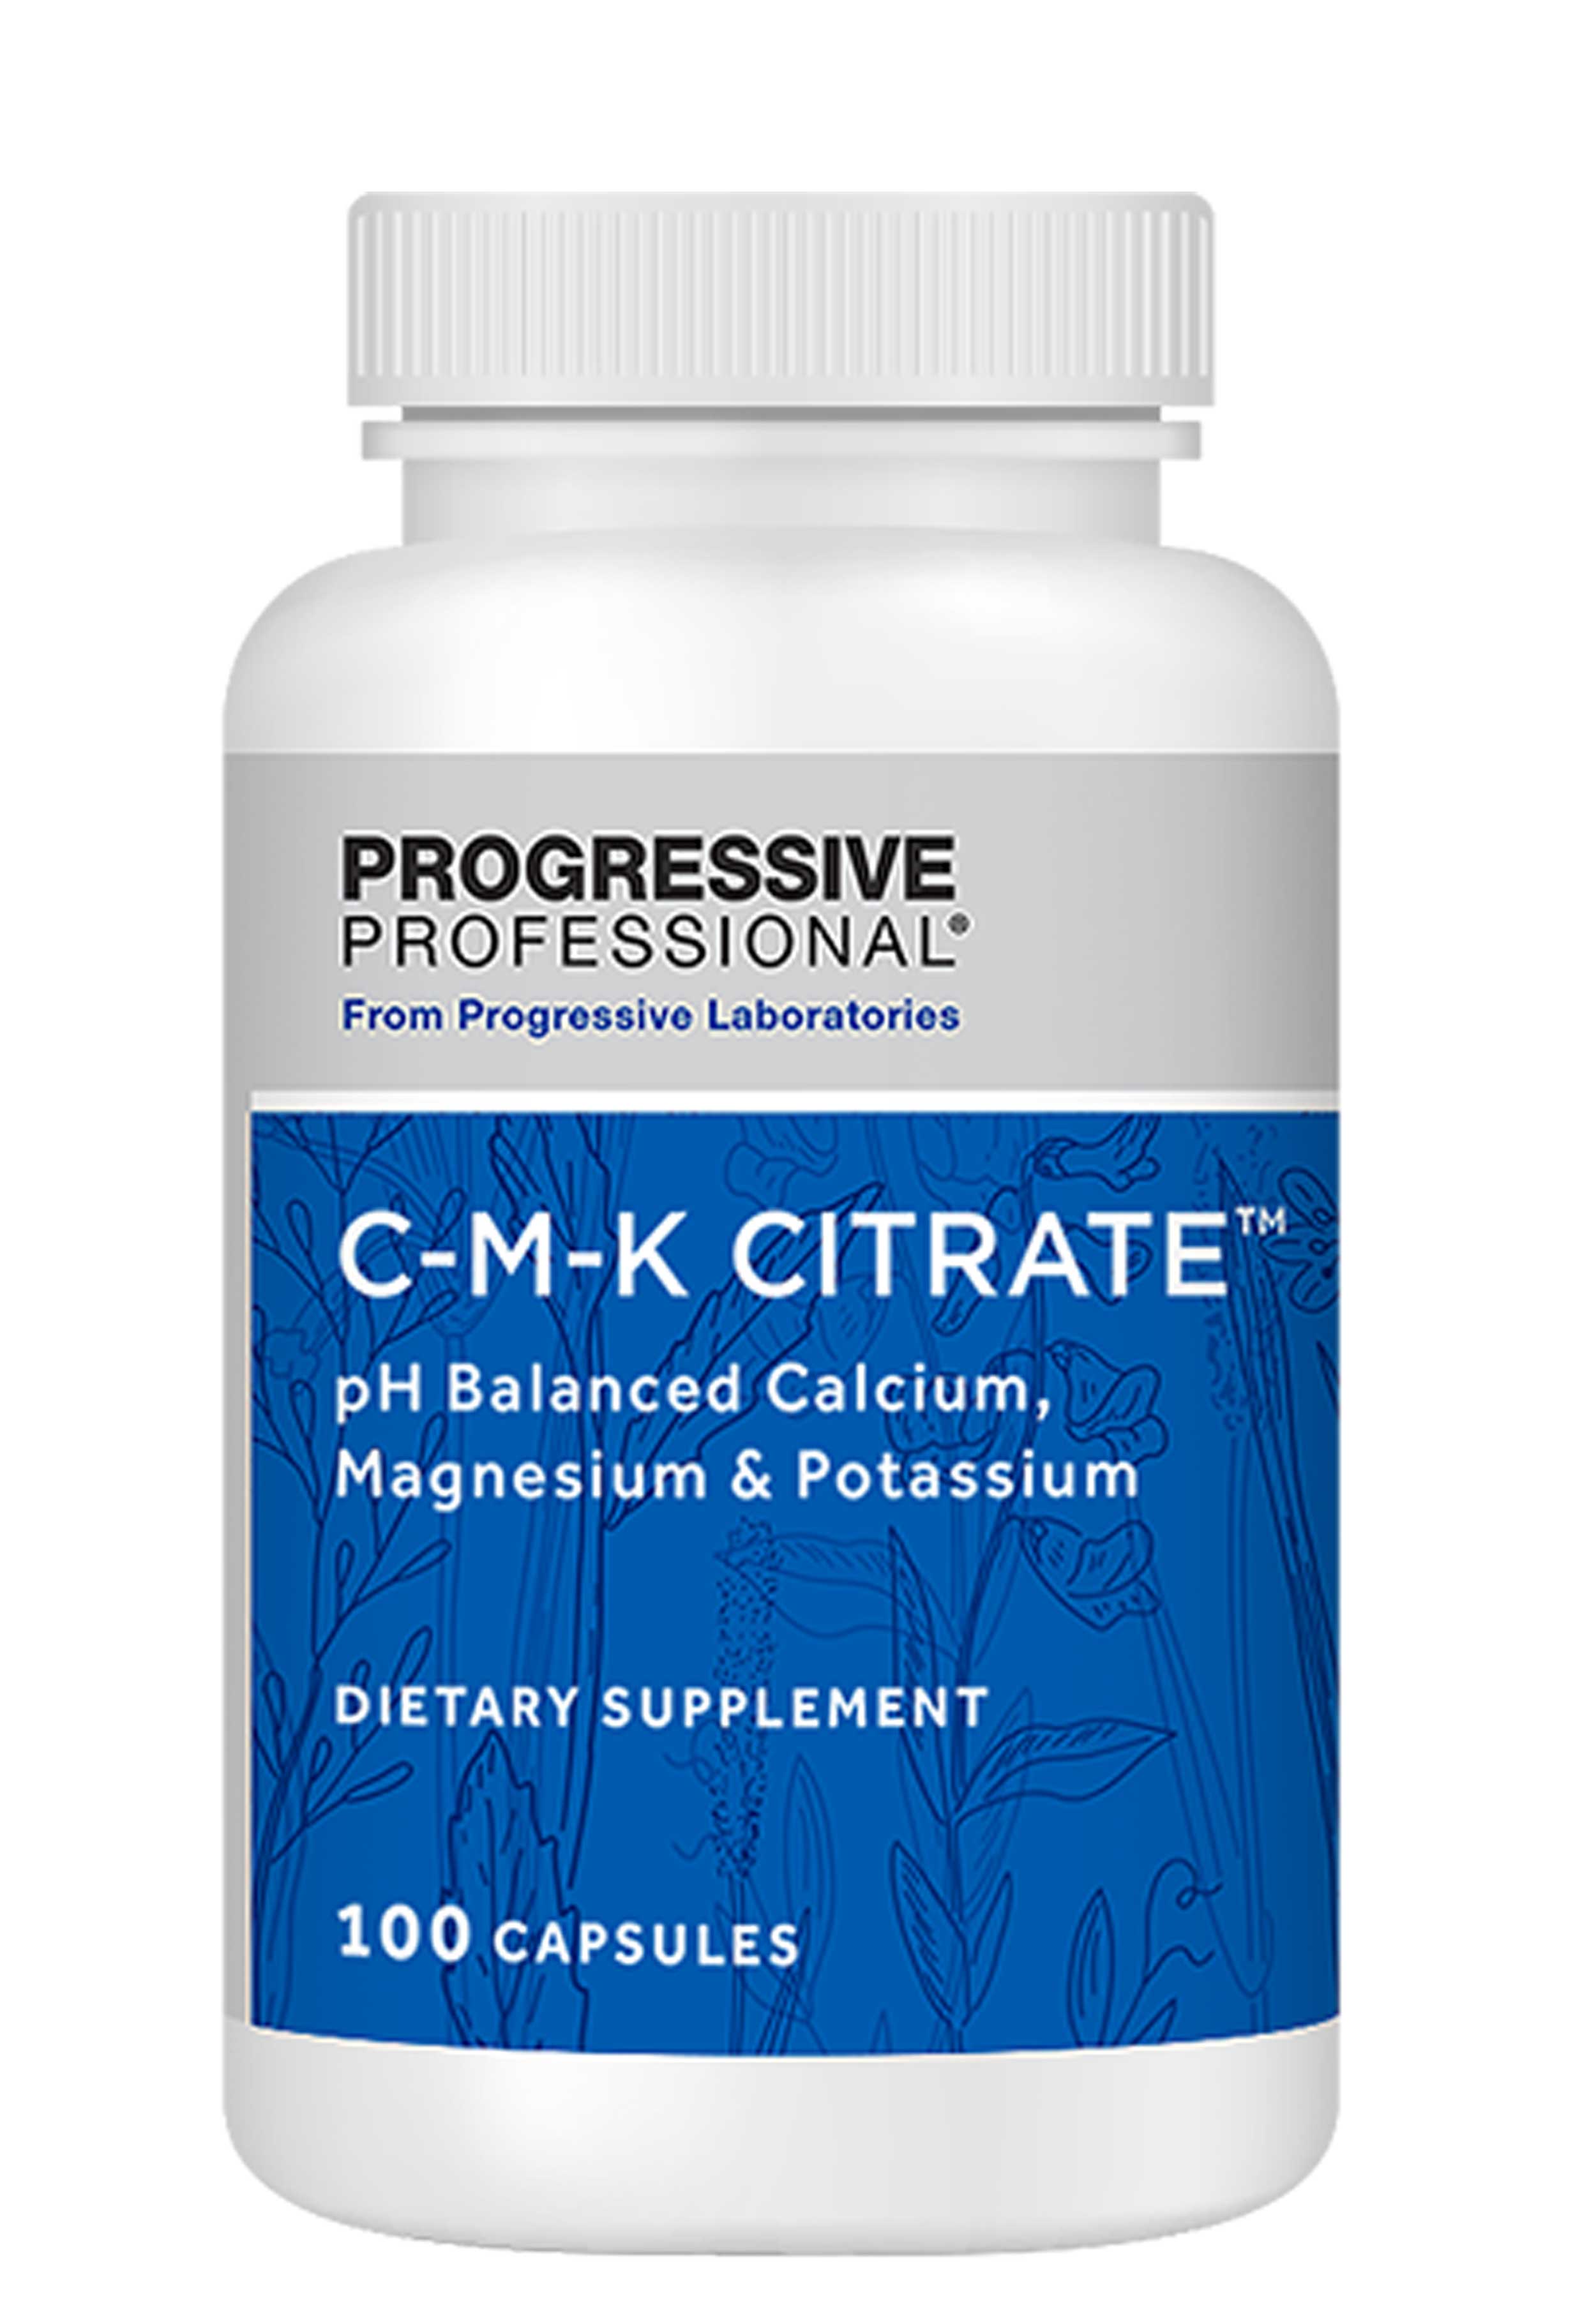 Progressive Laboratories C-M-K Citrate